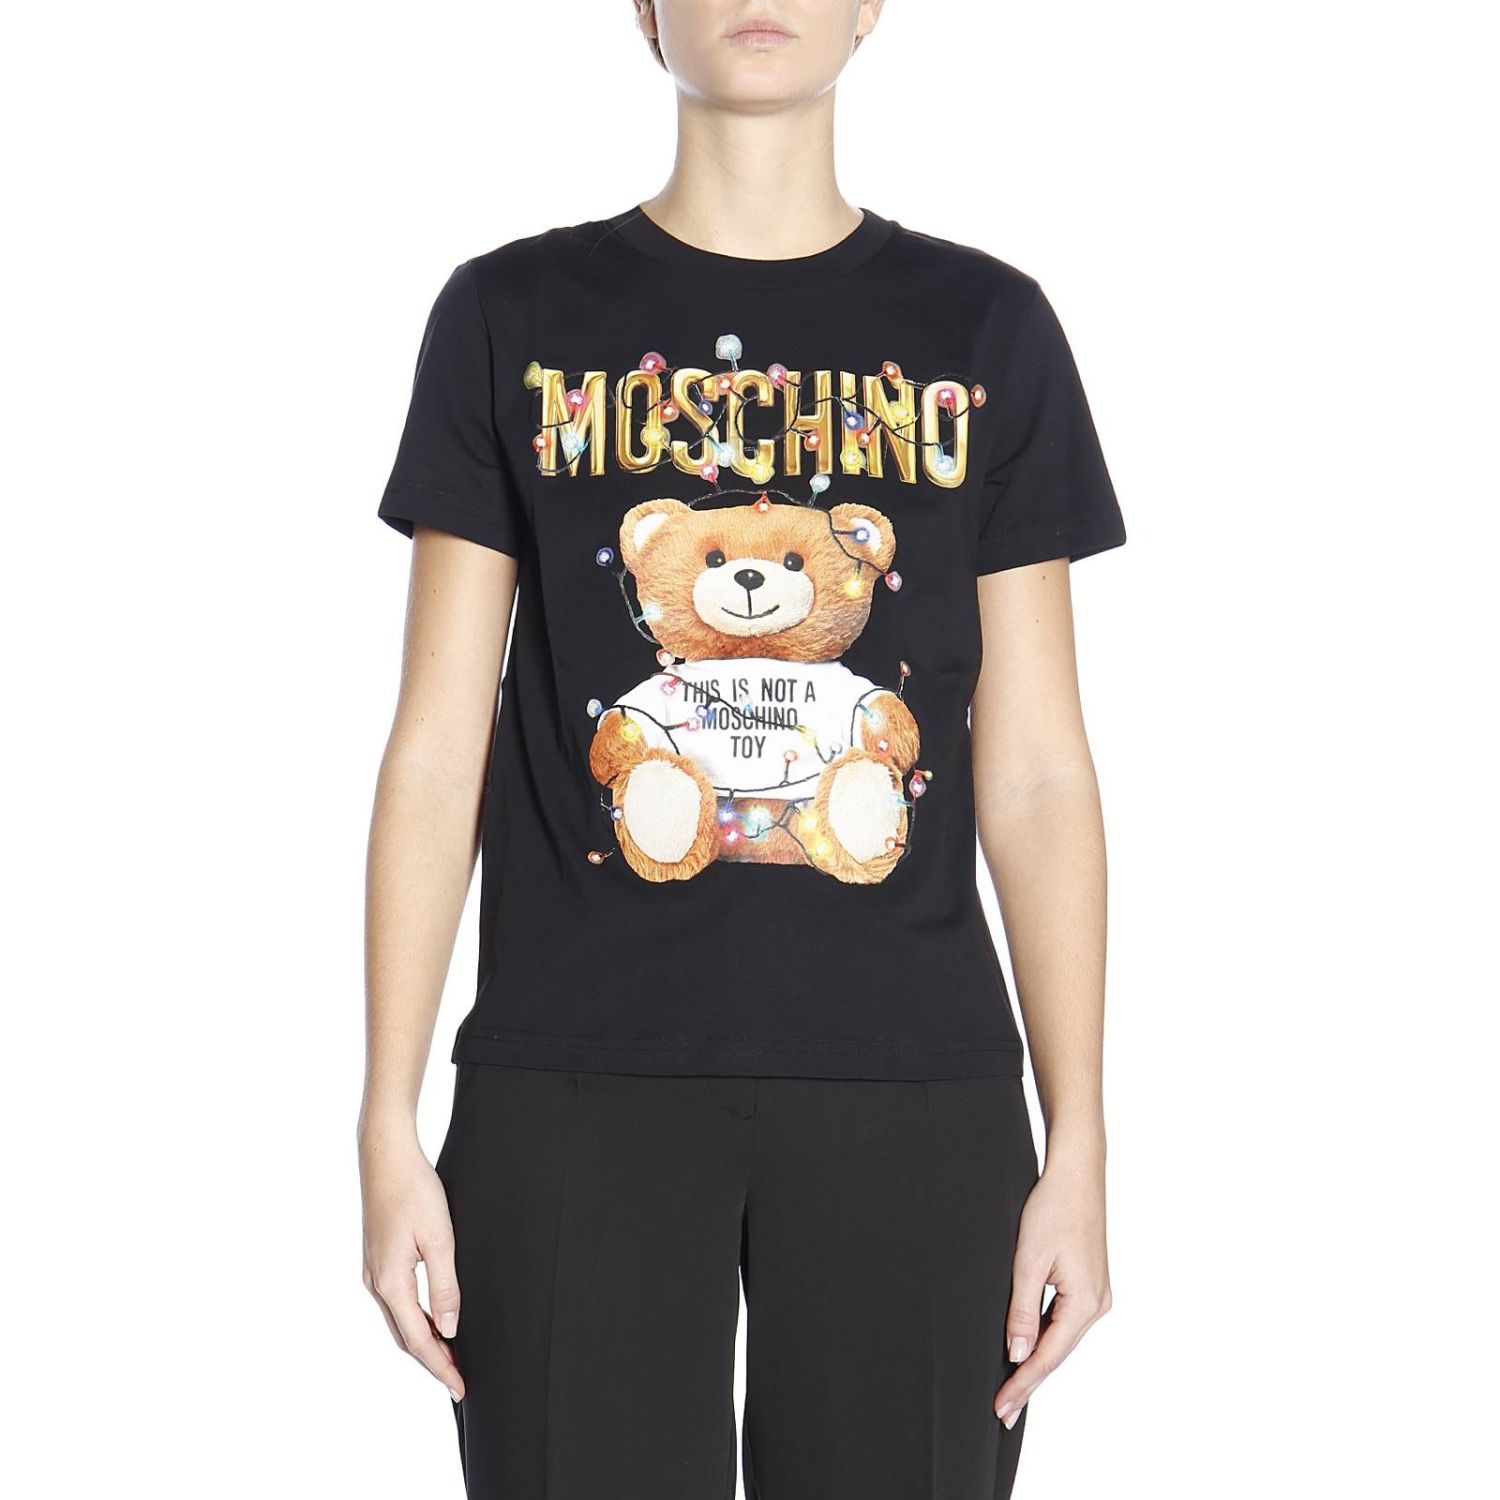 moschino t shirt original